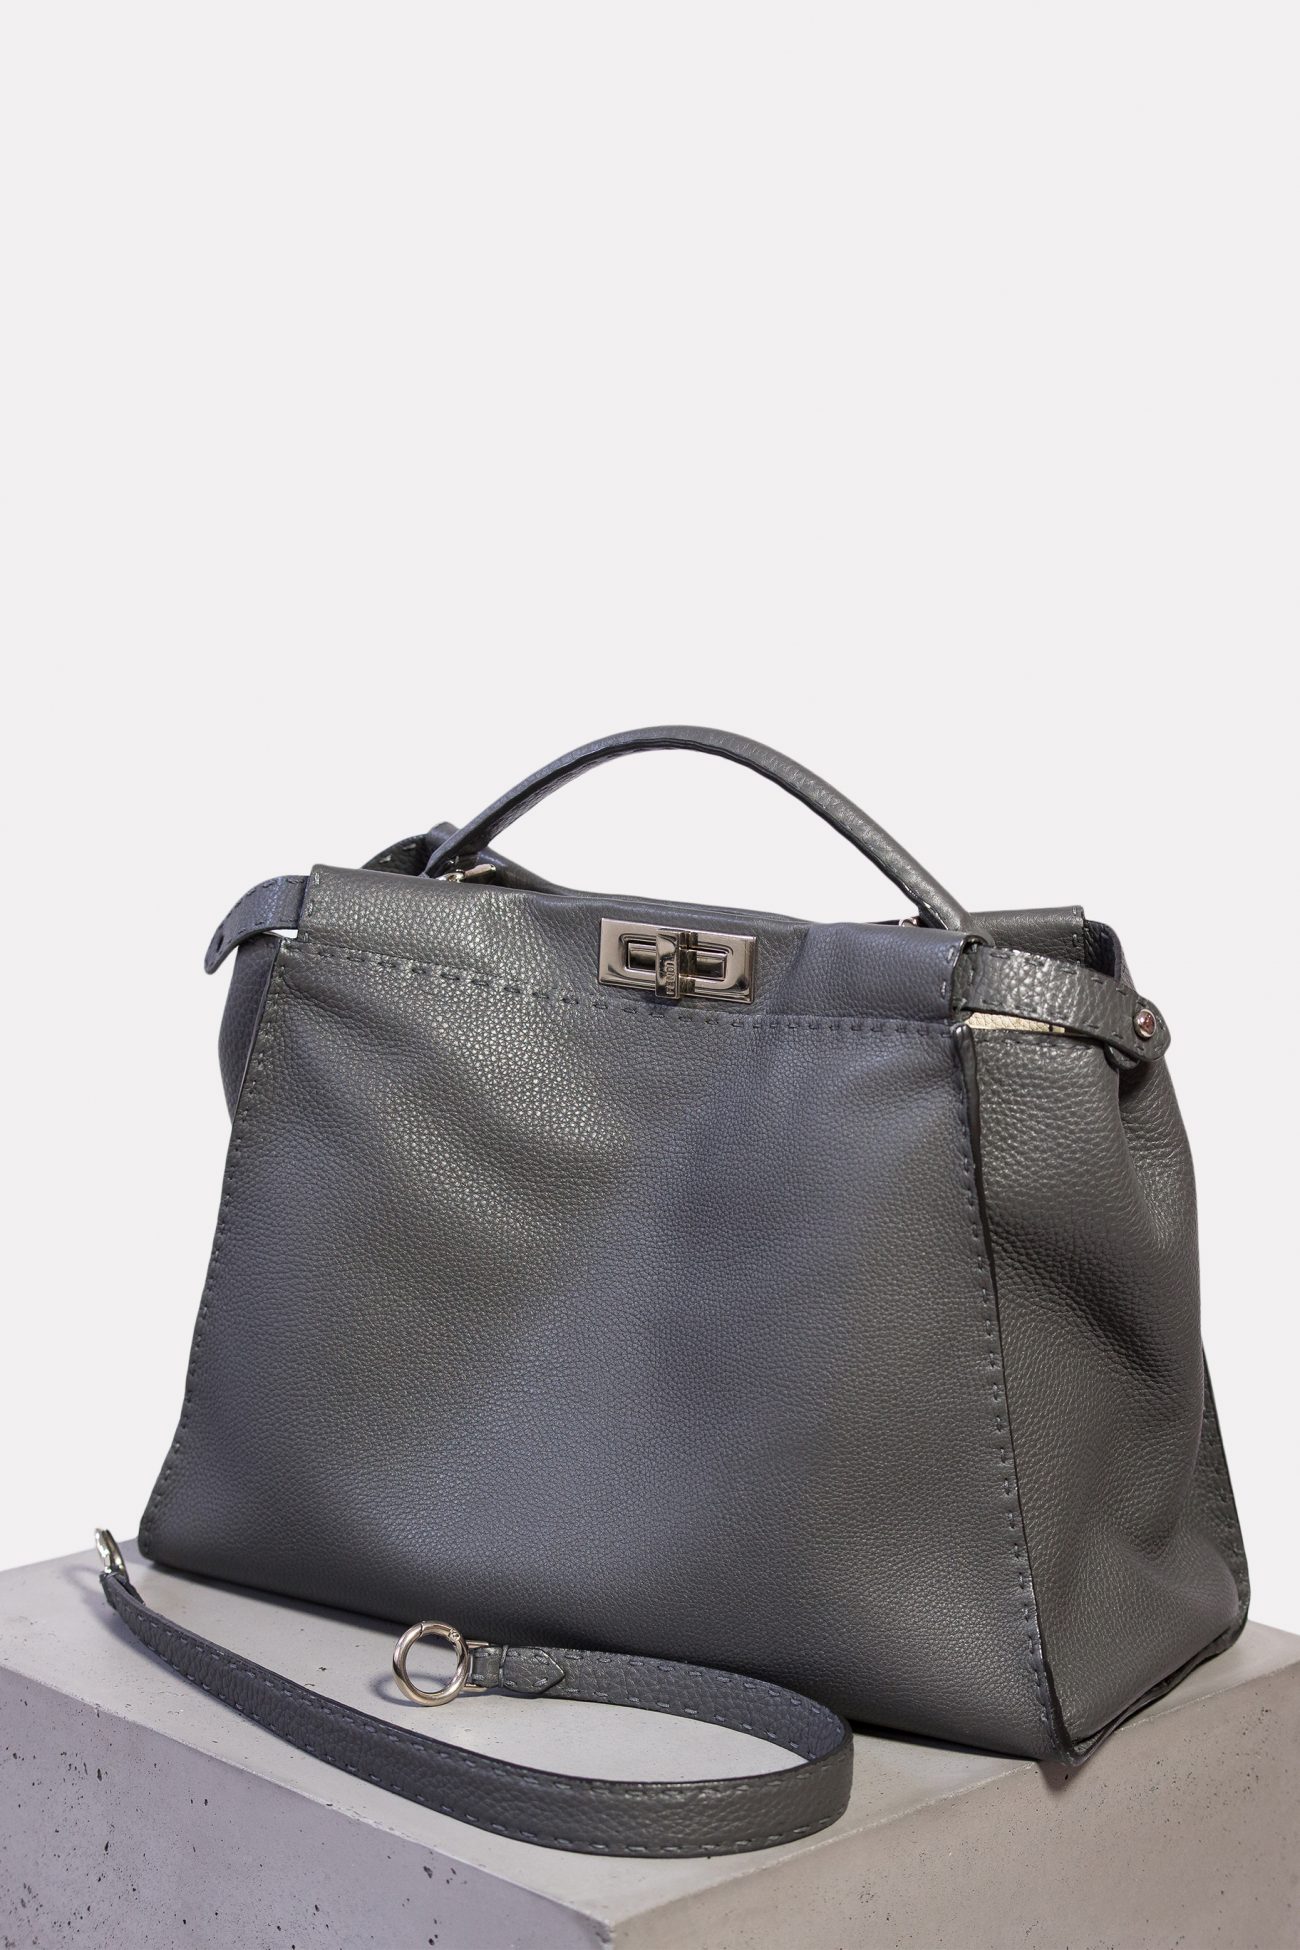 Fendi Peekaboo Bag - Huntessa Luxury Online Consignment Boutique